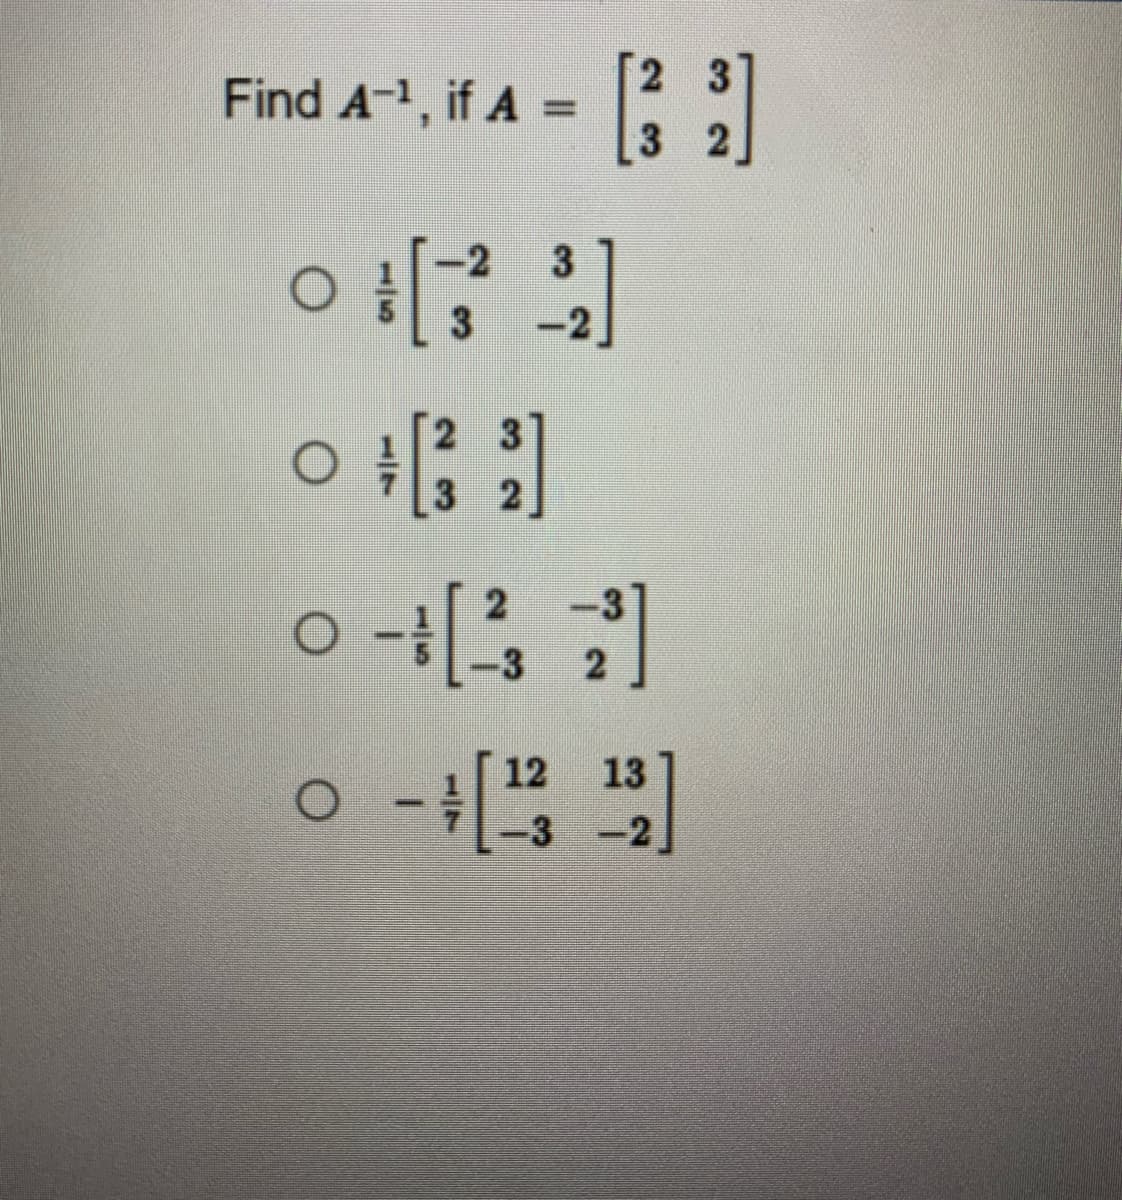 Find A-¹, if A =
-2
3
O
23
32
0 - [²2]
O
-3
12
13
O
- [
-2
32]
-2
-3
3 2